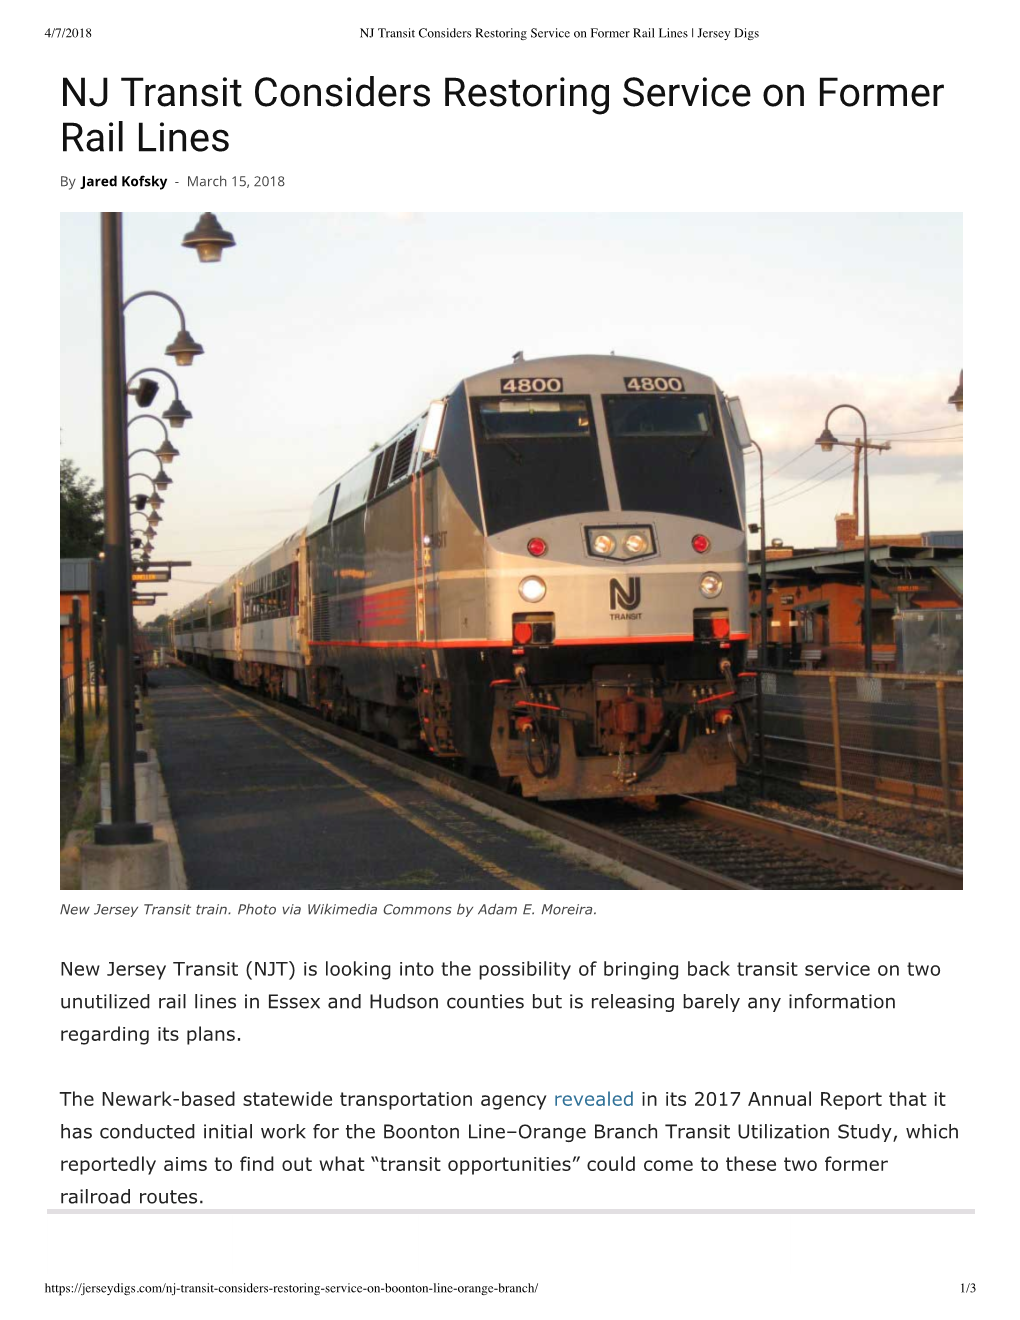 NJ Transit Considers Restoring Service on Former Rail Lines | Jersey Digs NJ Transit Considers Restoring Service on Former Rail Lines